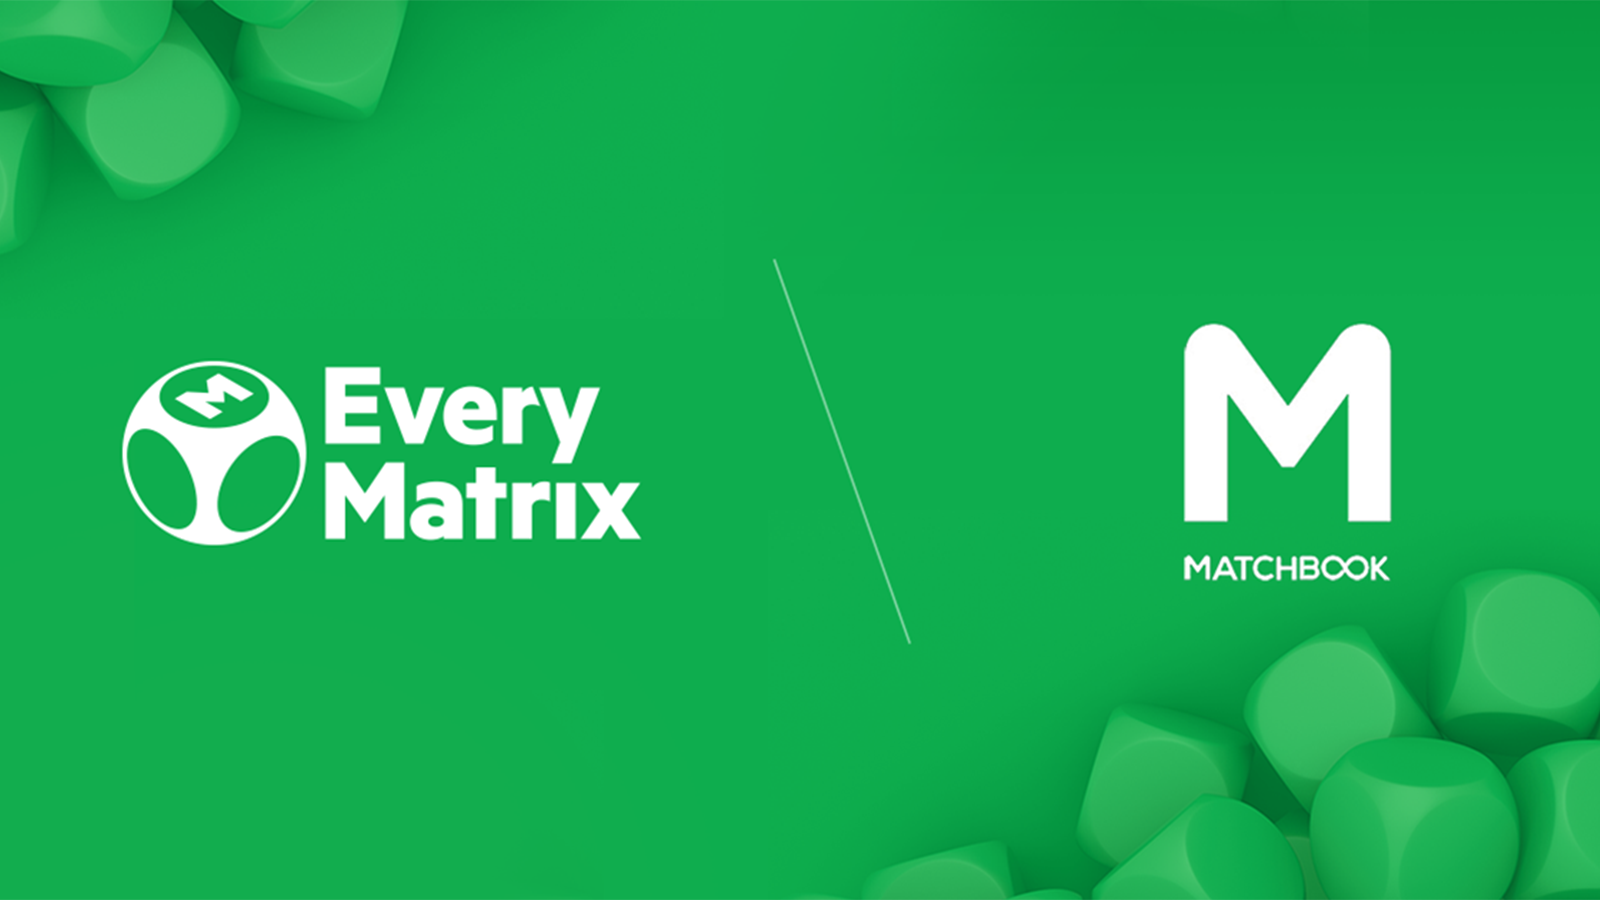 EveryMatrix Partners with Matchbook